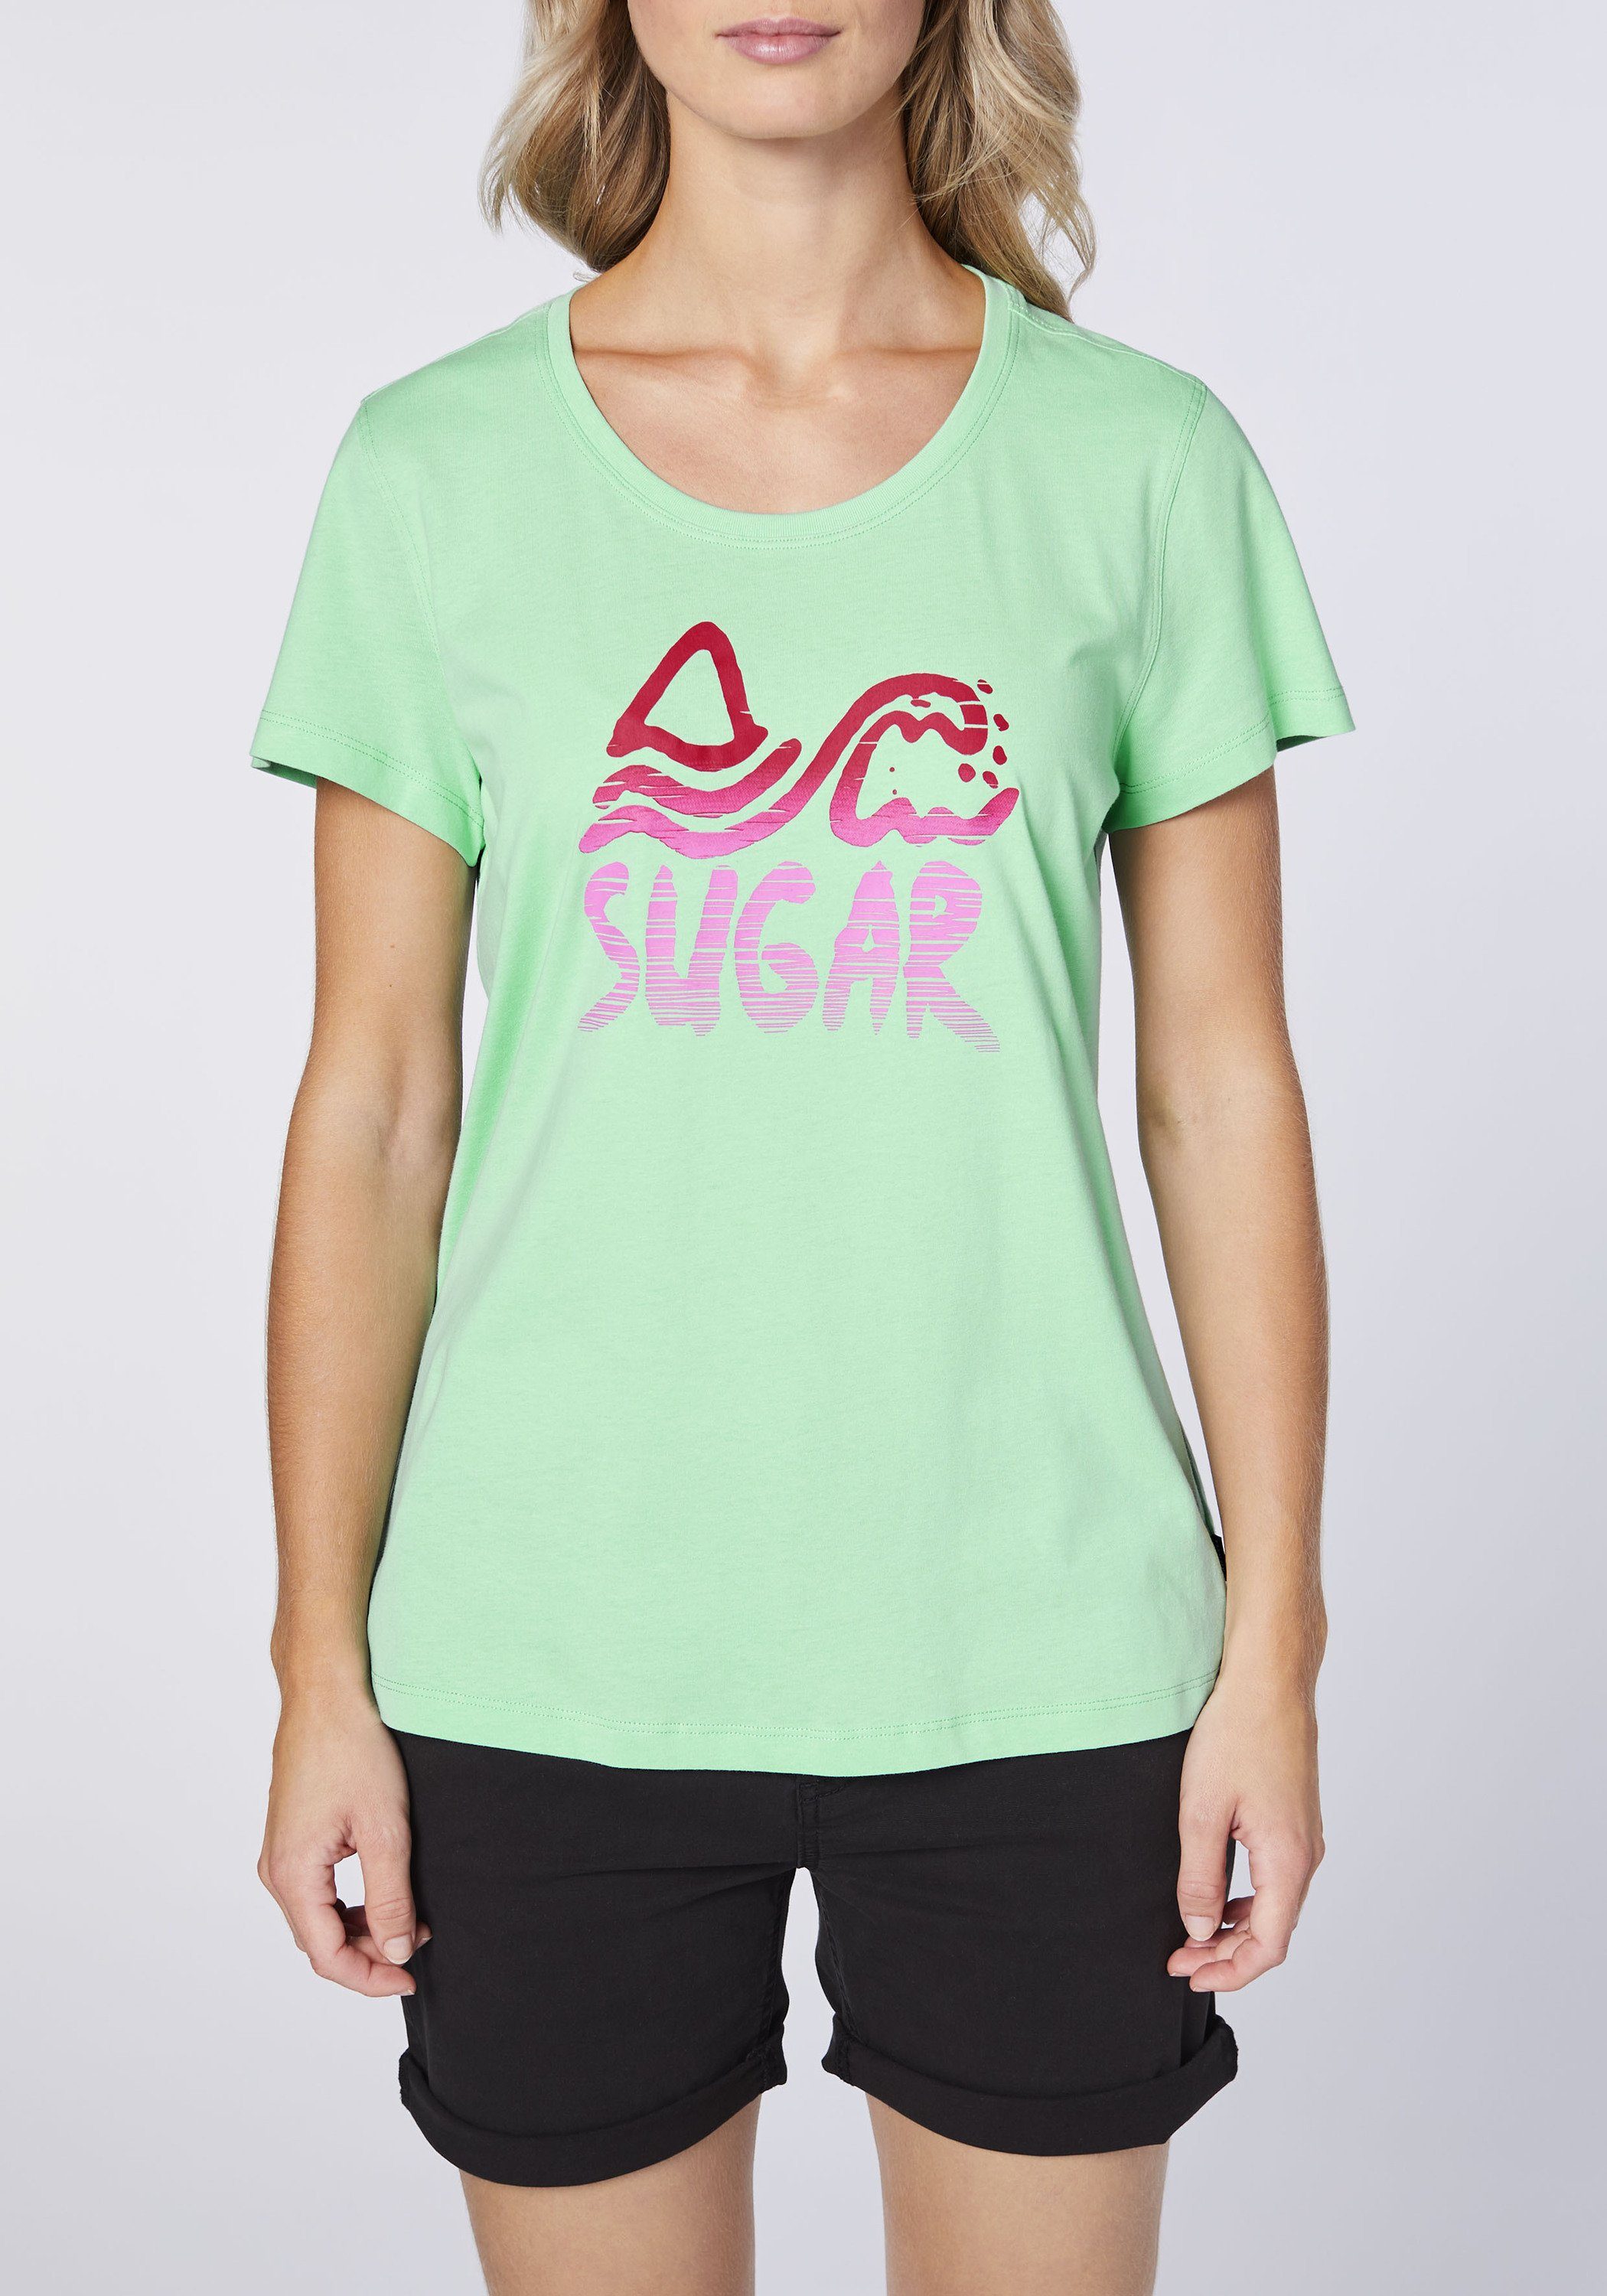 Chiemsee mit Green Neptune 1 farbenfrohem Print-Shirt Frontprint T-Shirt